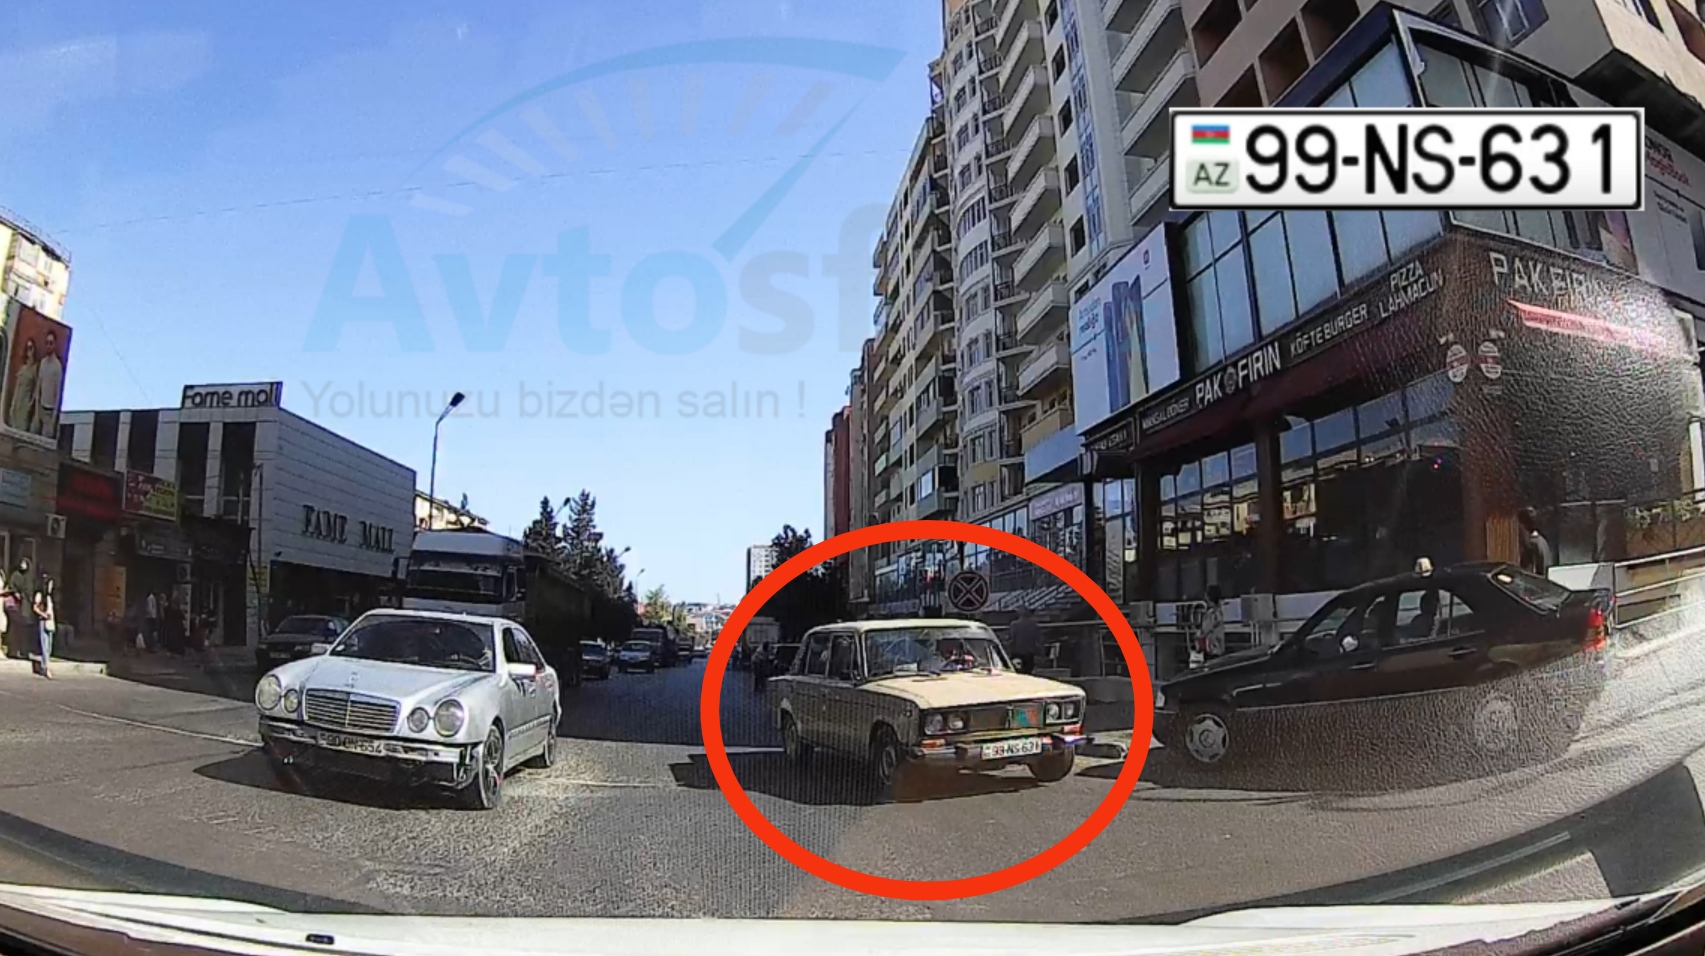 Özünü cavan "avtoş" kimi aparan yaşlı sürücü Xırdalanda oyun çıxardı  - VİDEO